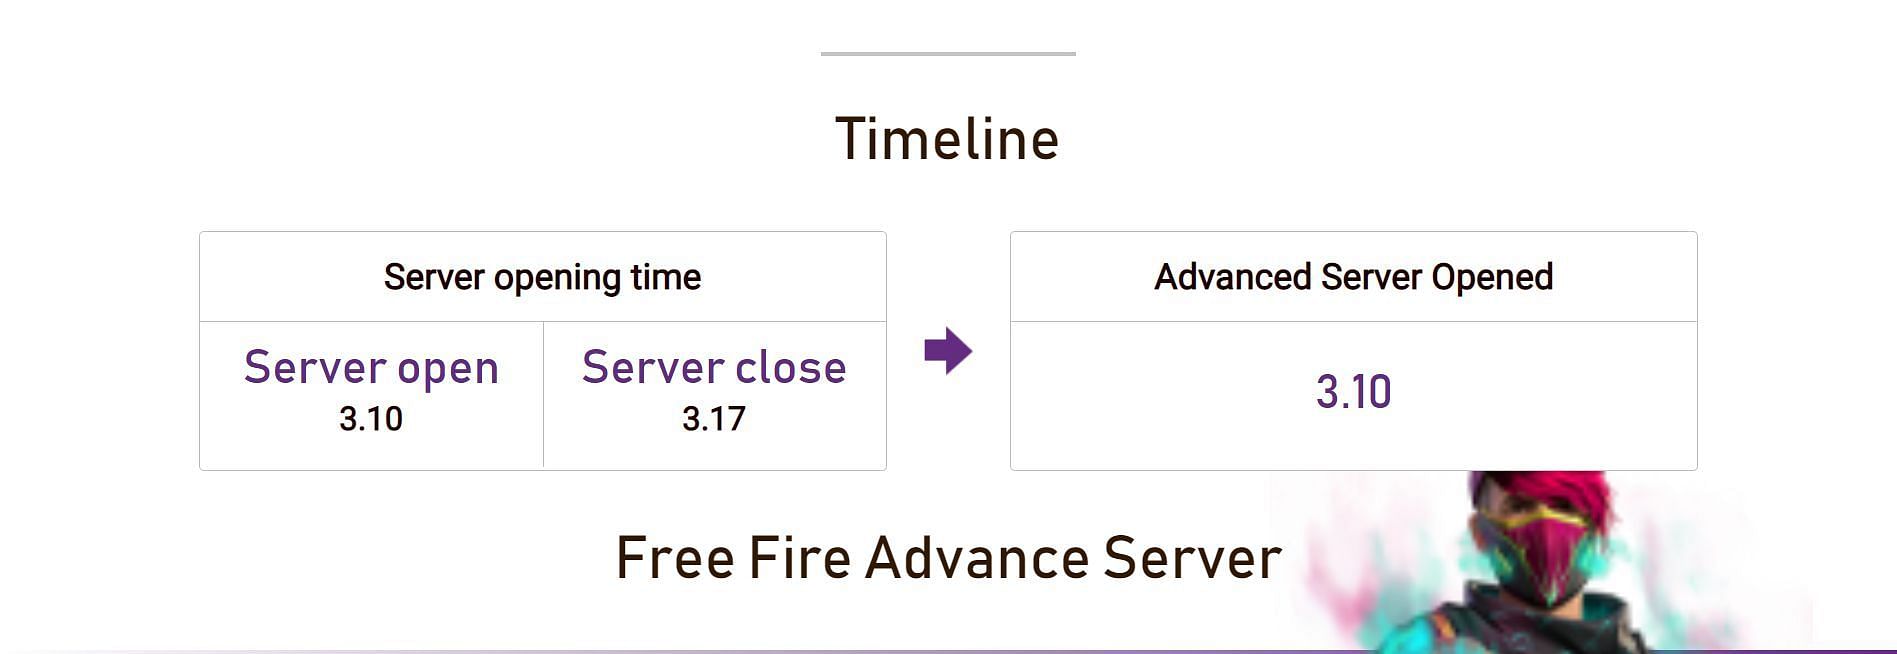 Timeline of the Free Fire OB33 Advance Server (Image via Garena)